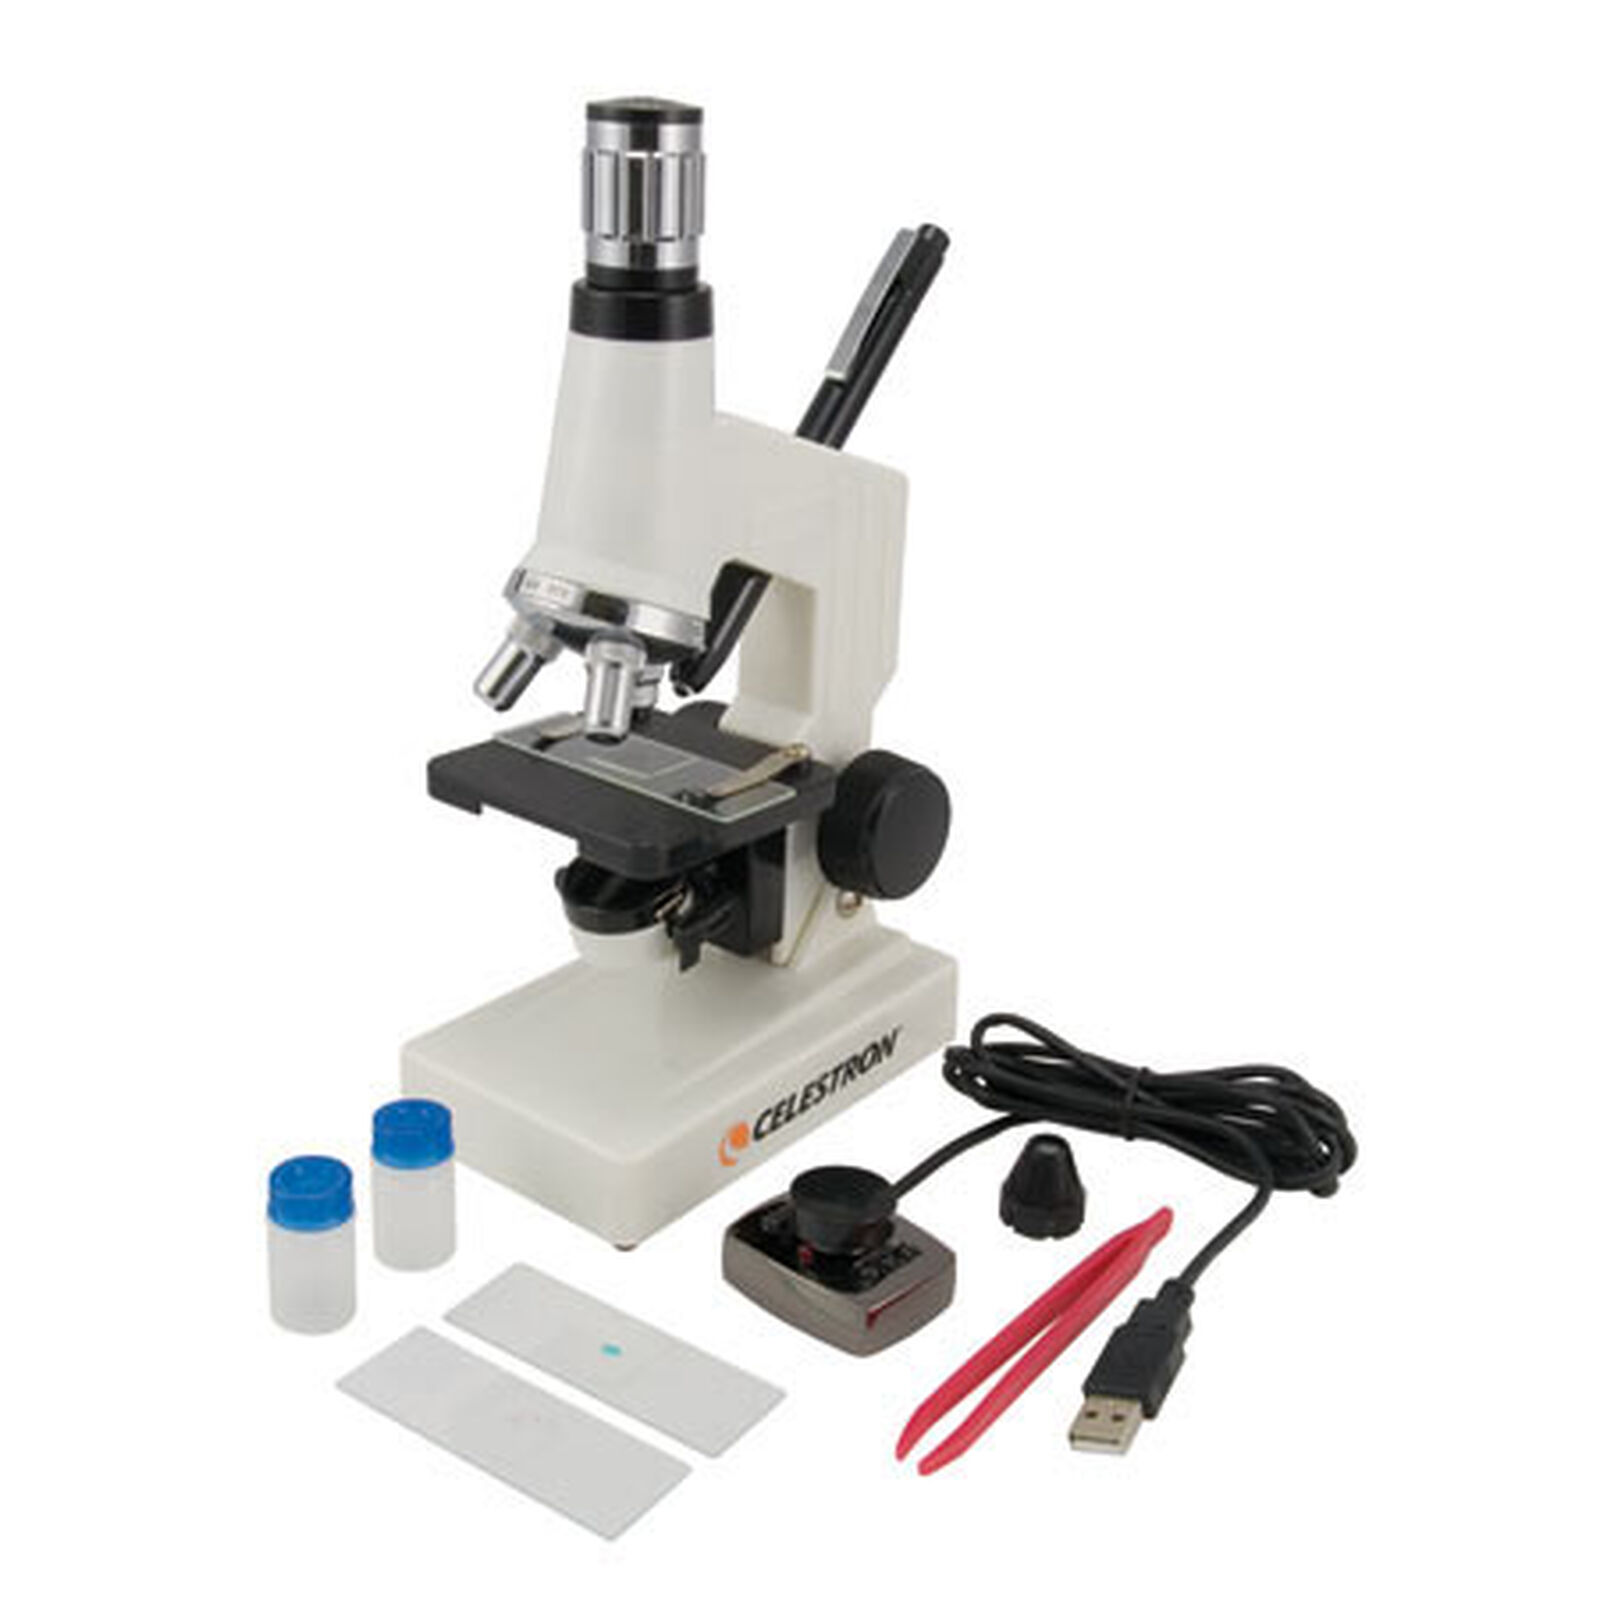 CSN Digital Microscope